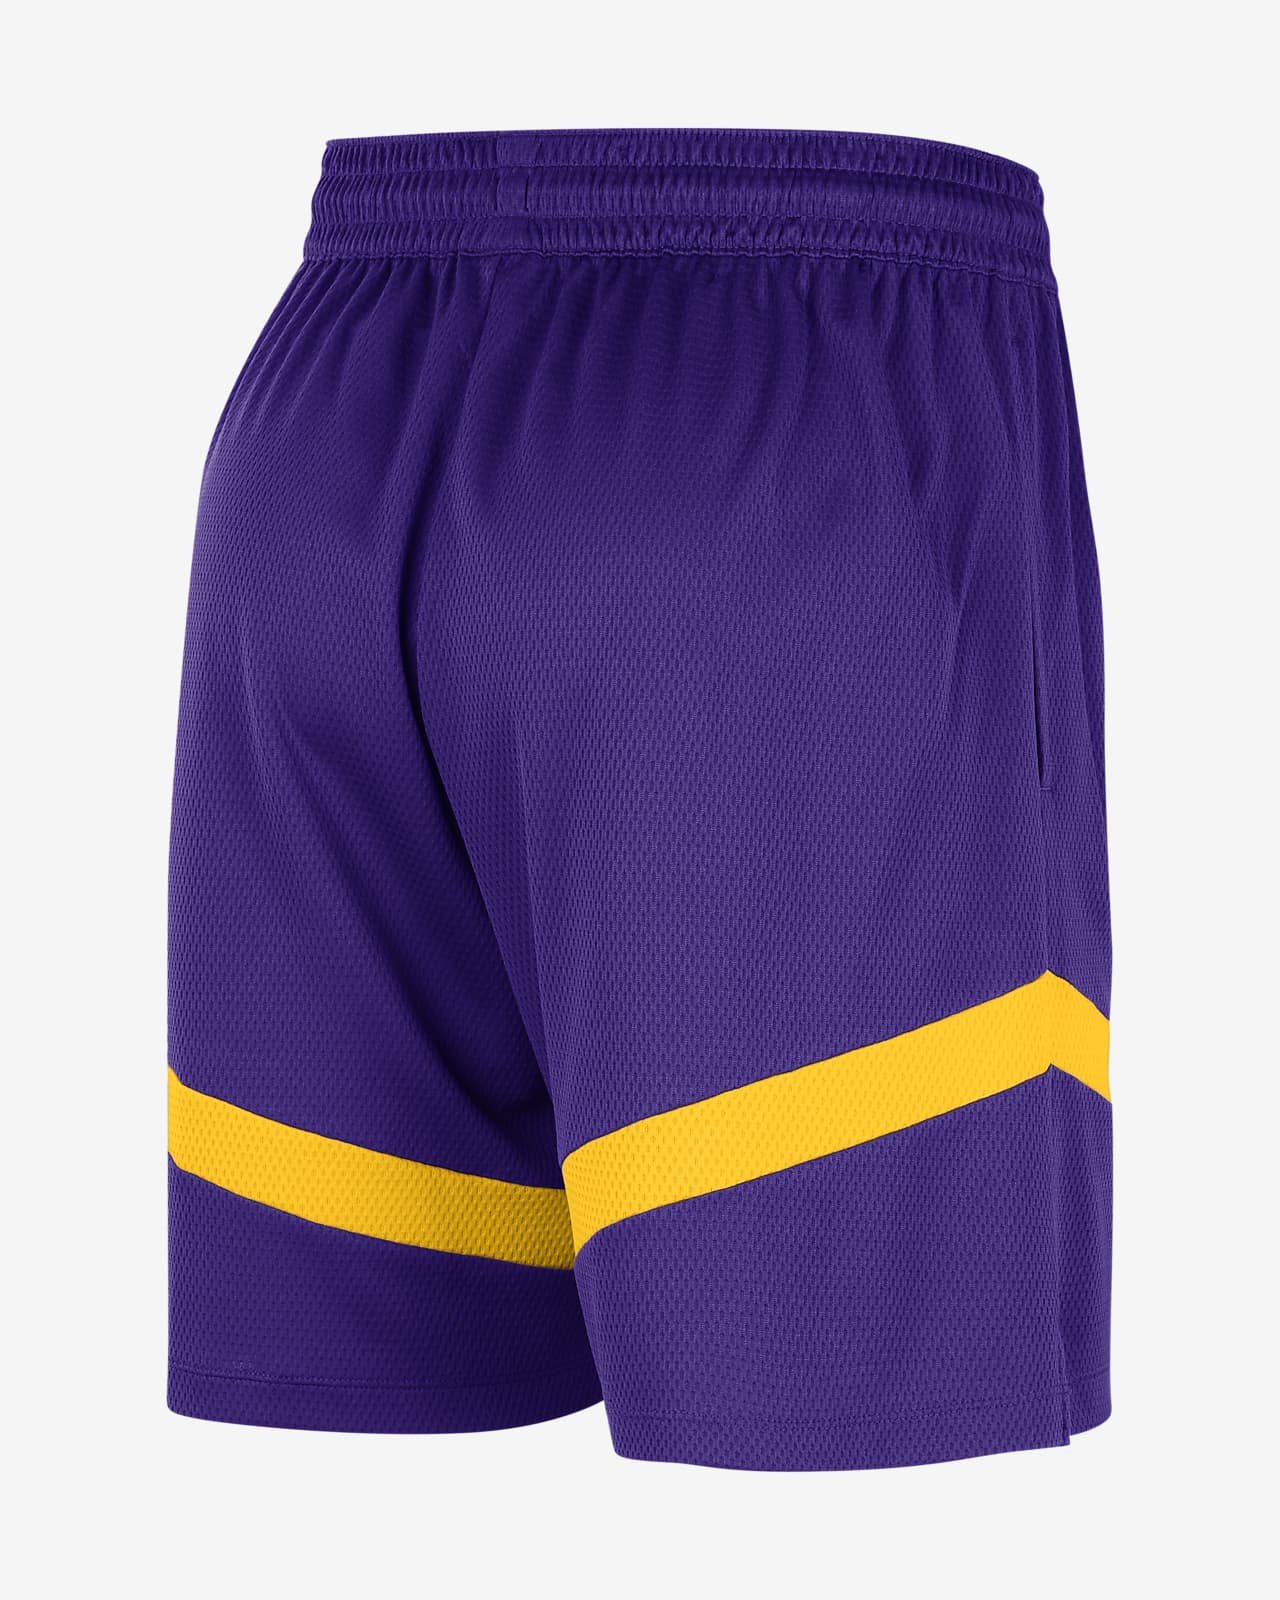 Los Angeles Lakers Men's Nike Dri-FIT NBA Practice T-Shirt